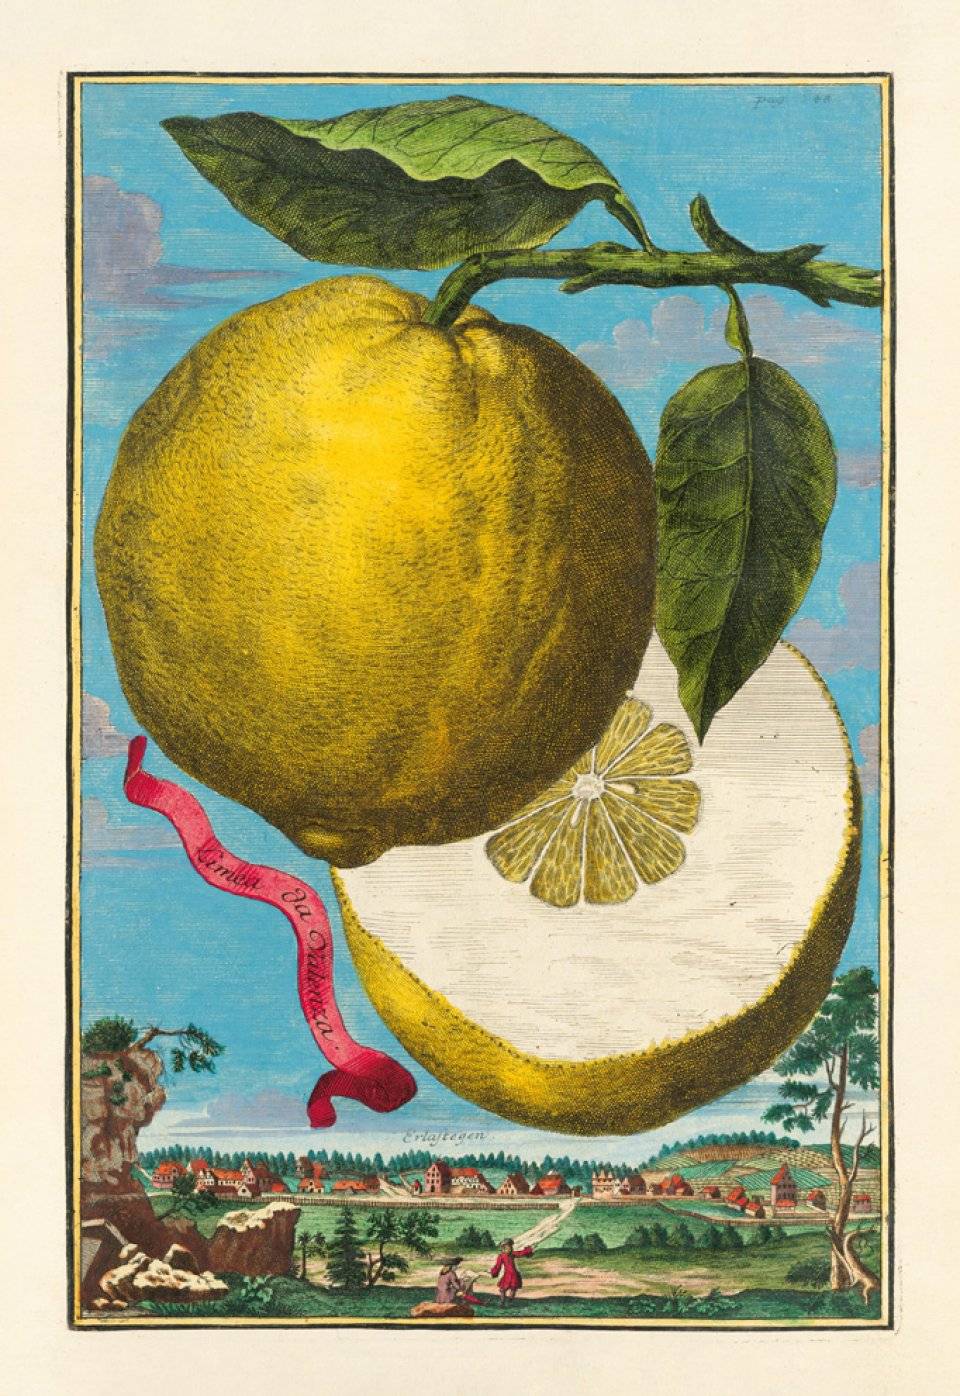 TASCHEN重现18世纪珍贵手绘铜版画华丽再现来自天上的柑橘_手机搜狐网